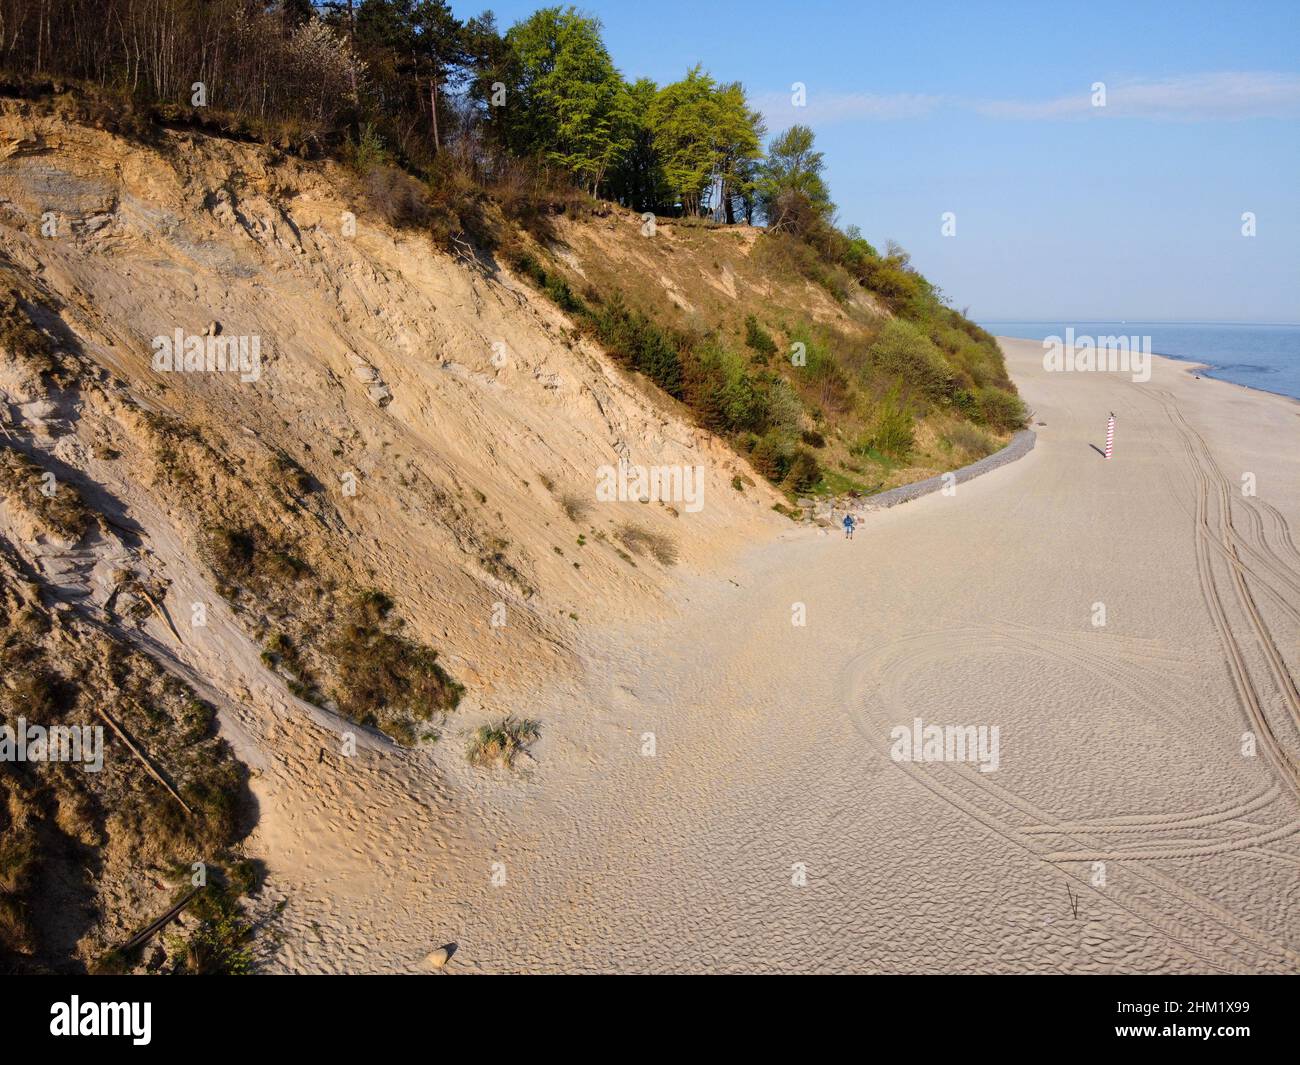 Empty beach at Jastrzebia Gora, most nothern point in Poland Stock Photo